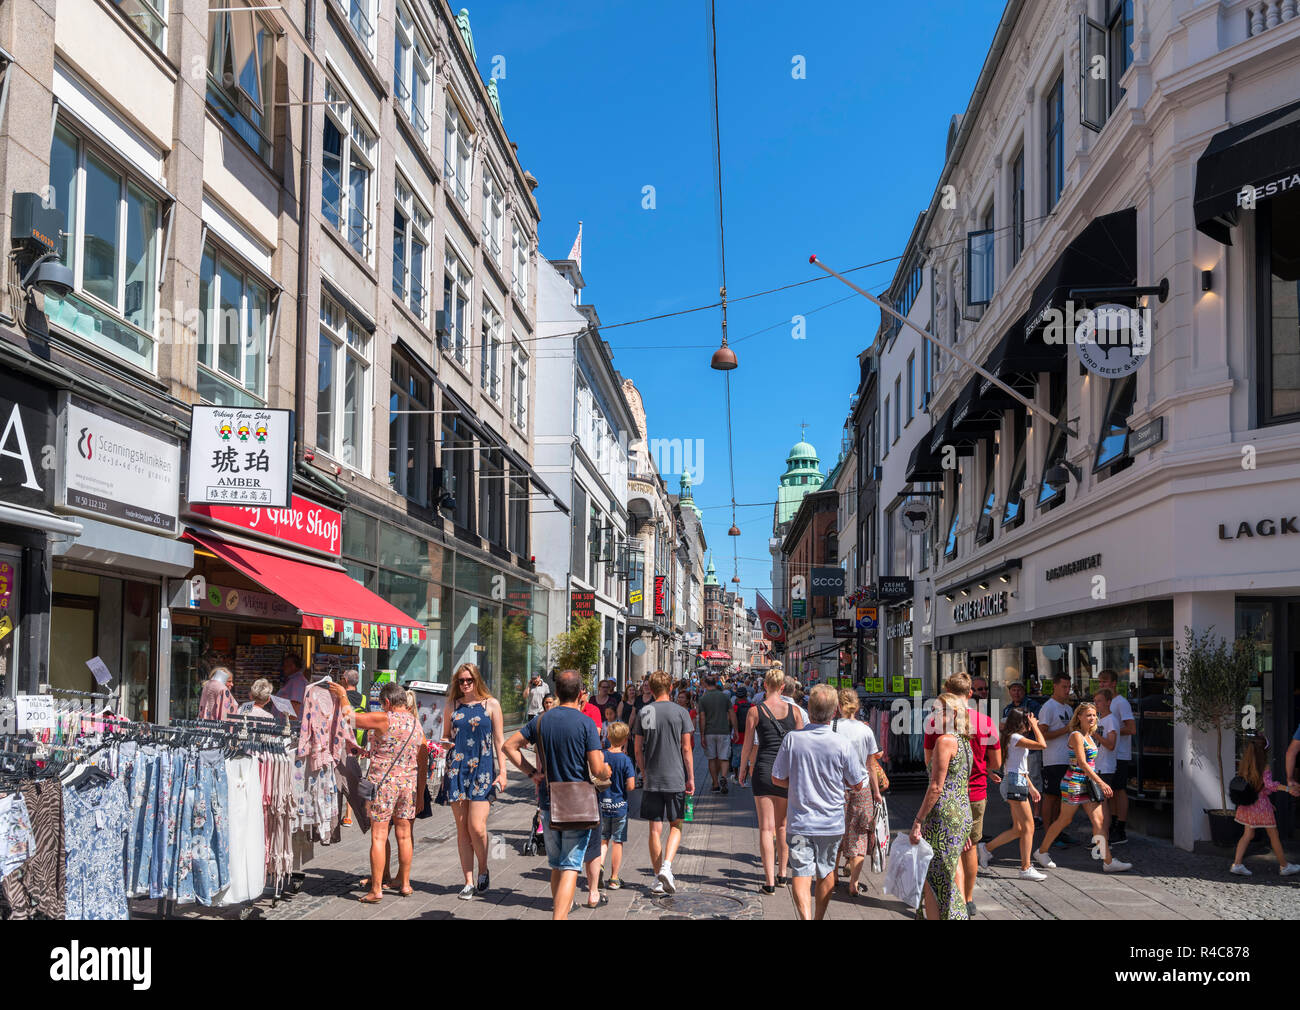 Copenhagen stroget street stock photography images -